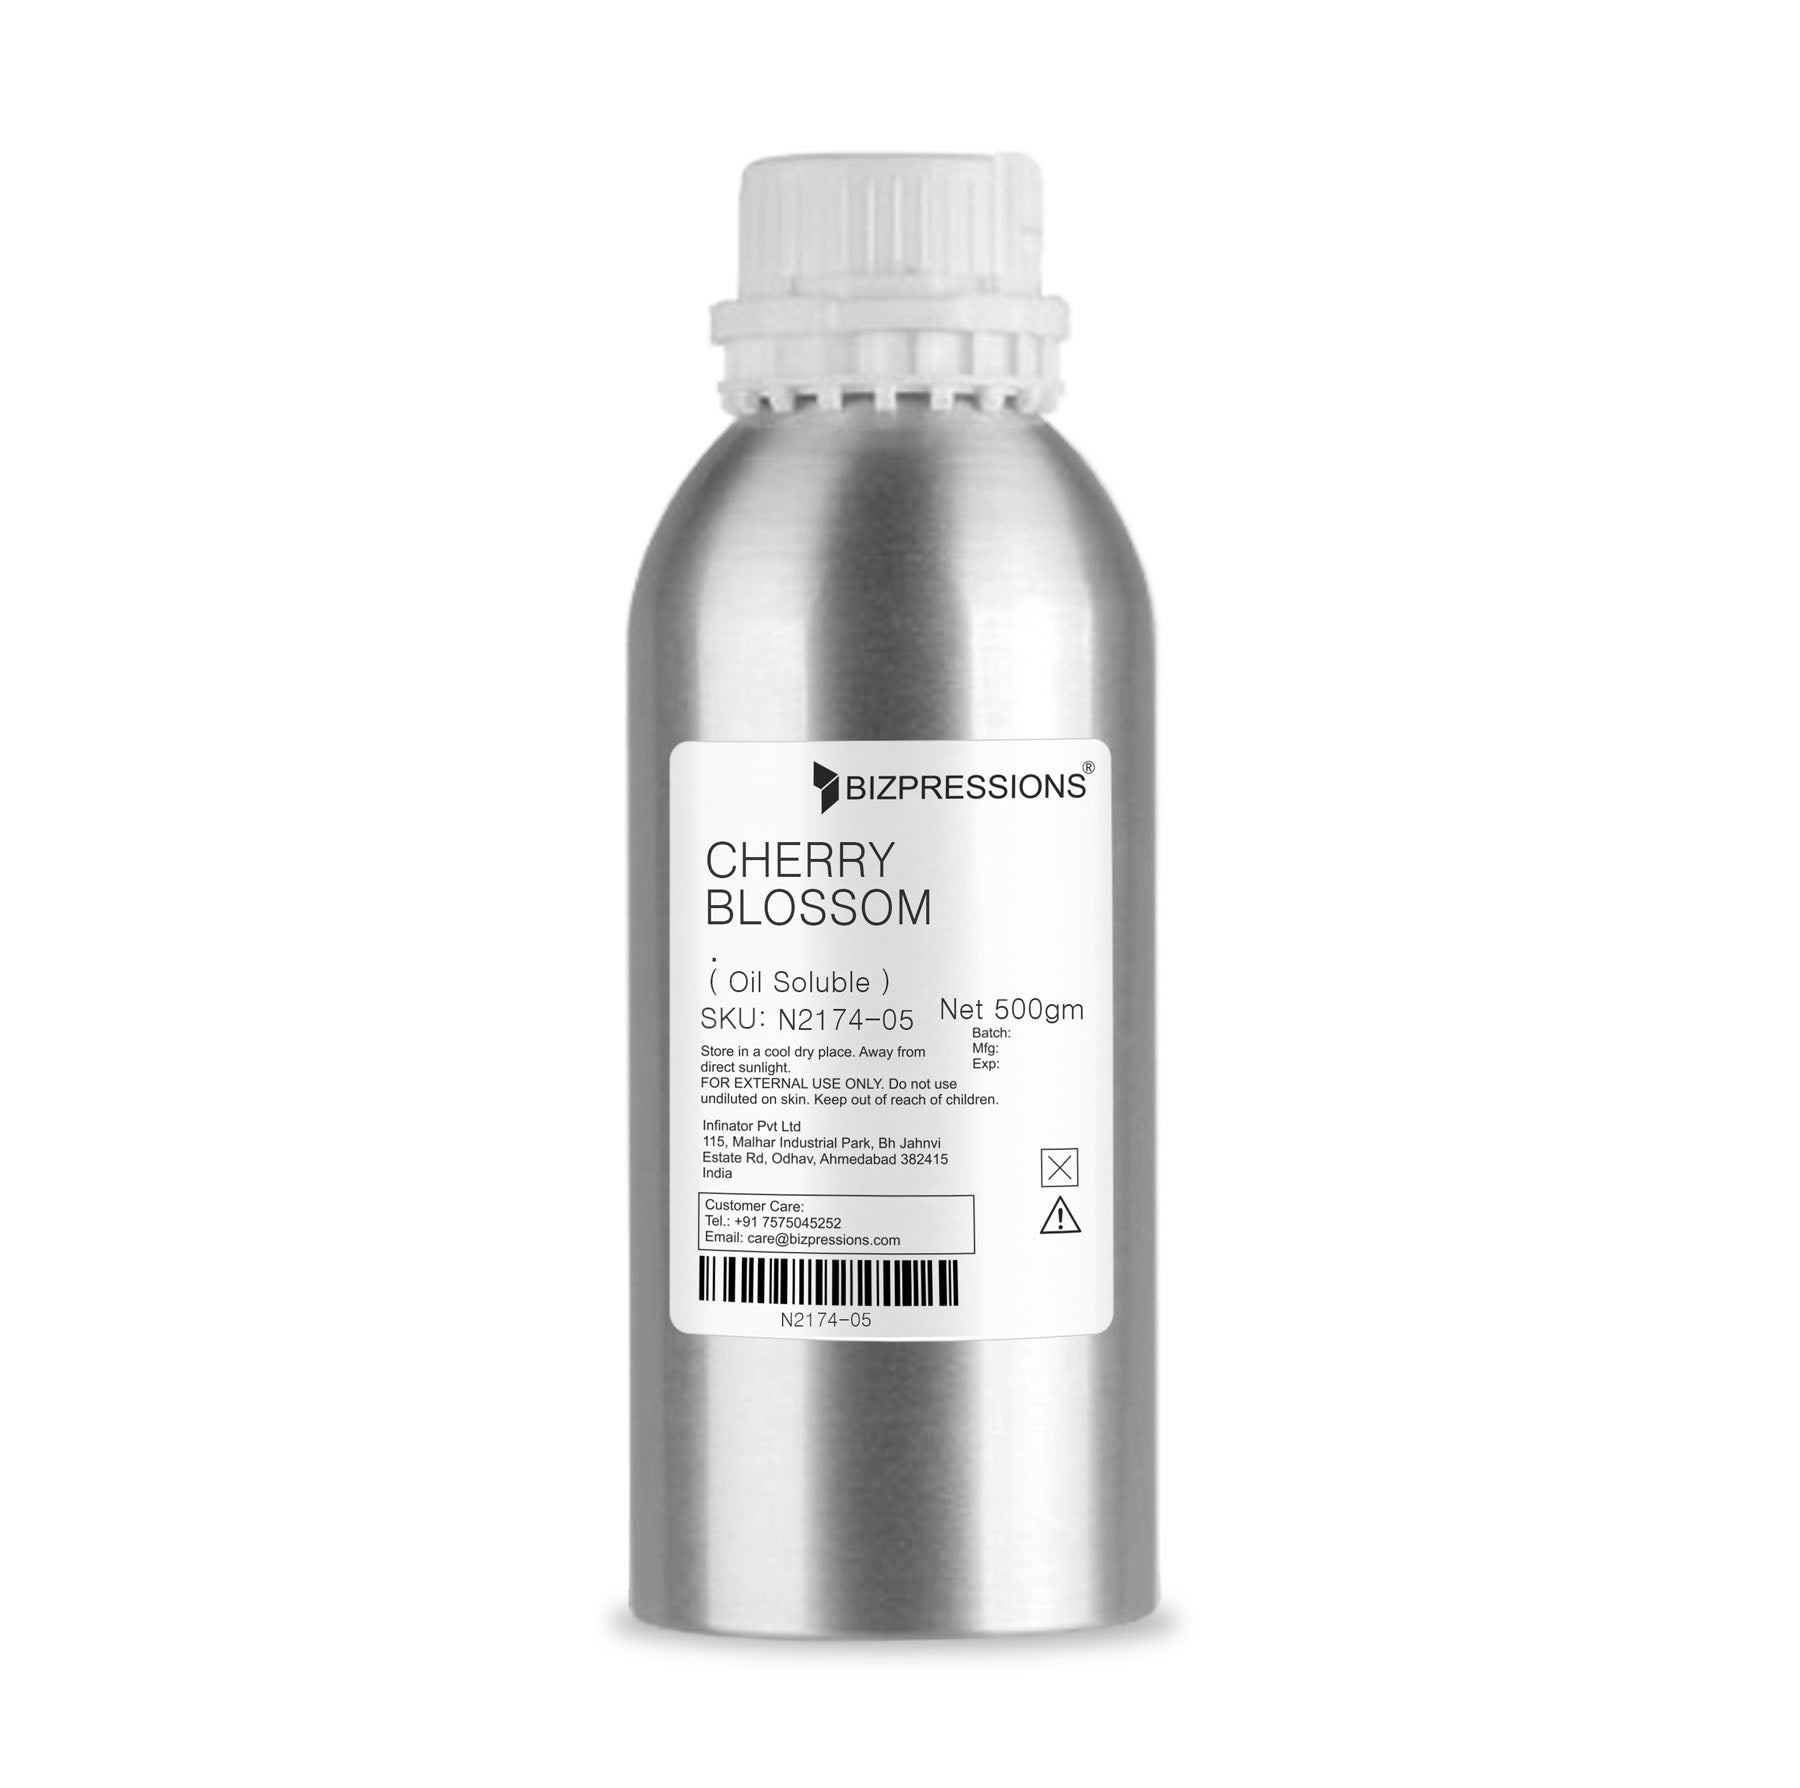 CHERRY BLOSSOM - Fragrance ( Oil Soluble ) - 500 gm